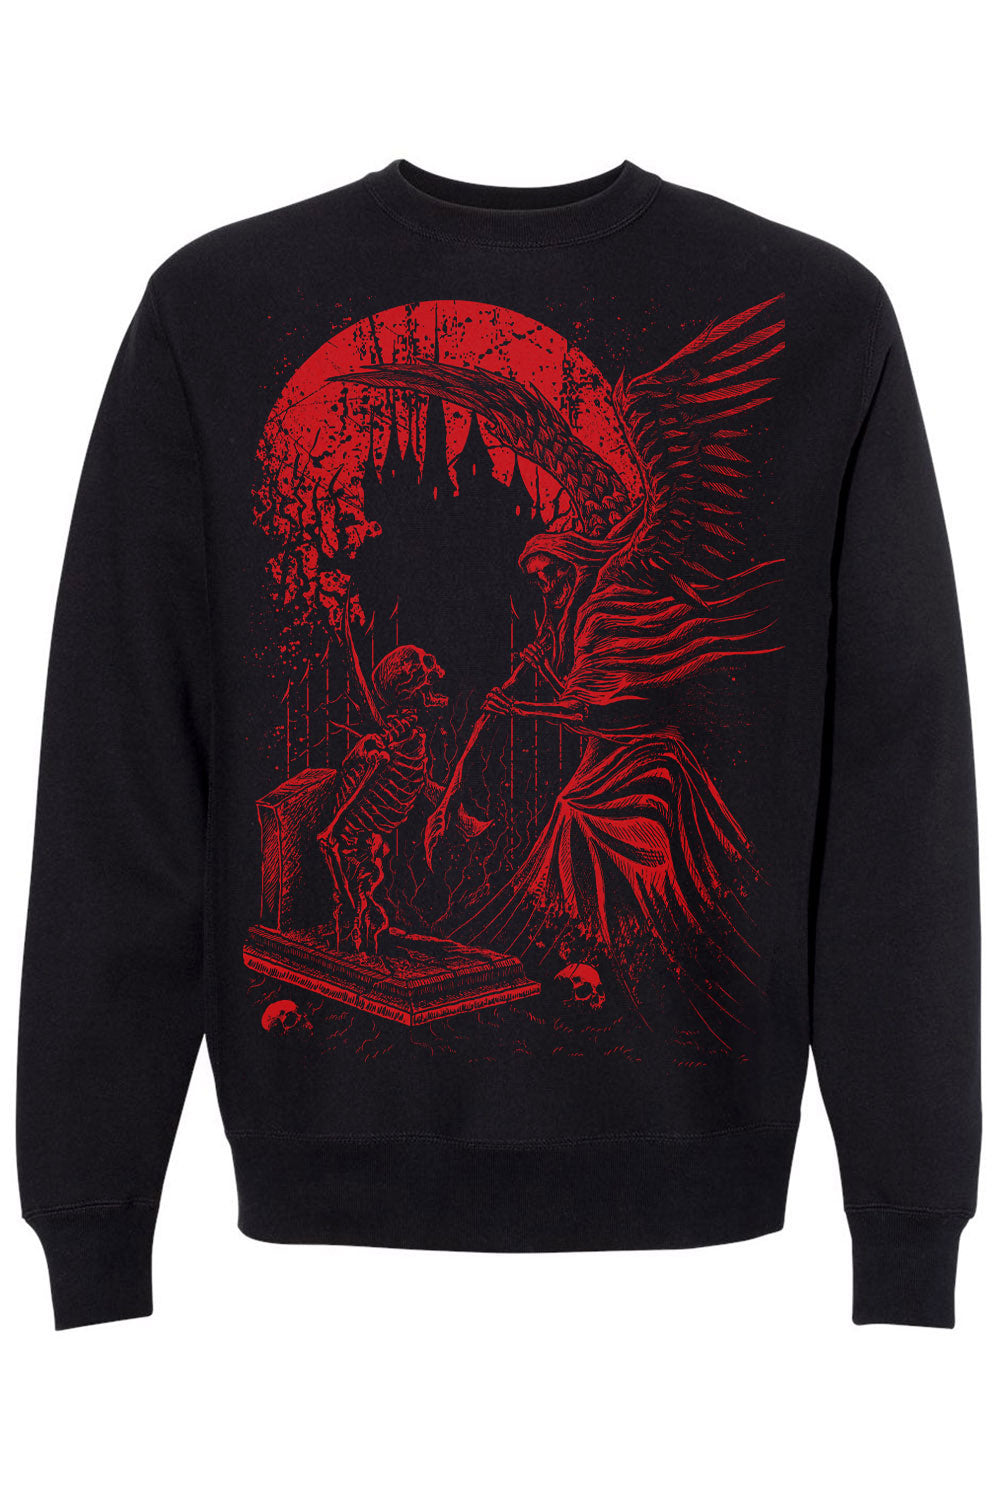 gothic black sweatshirt